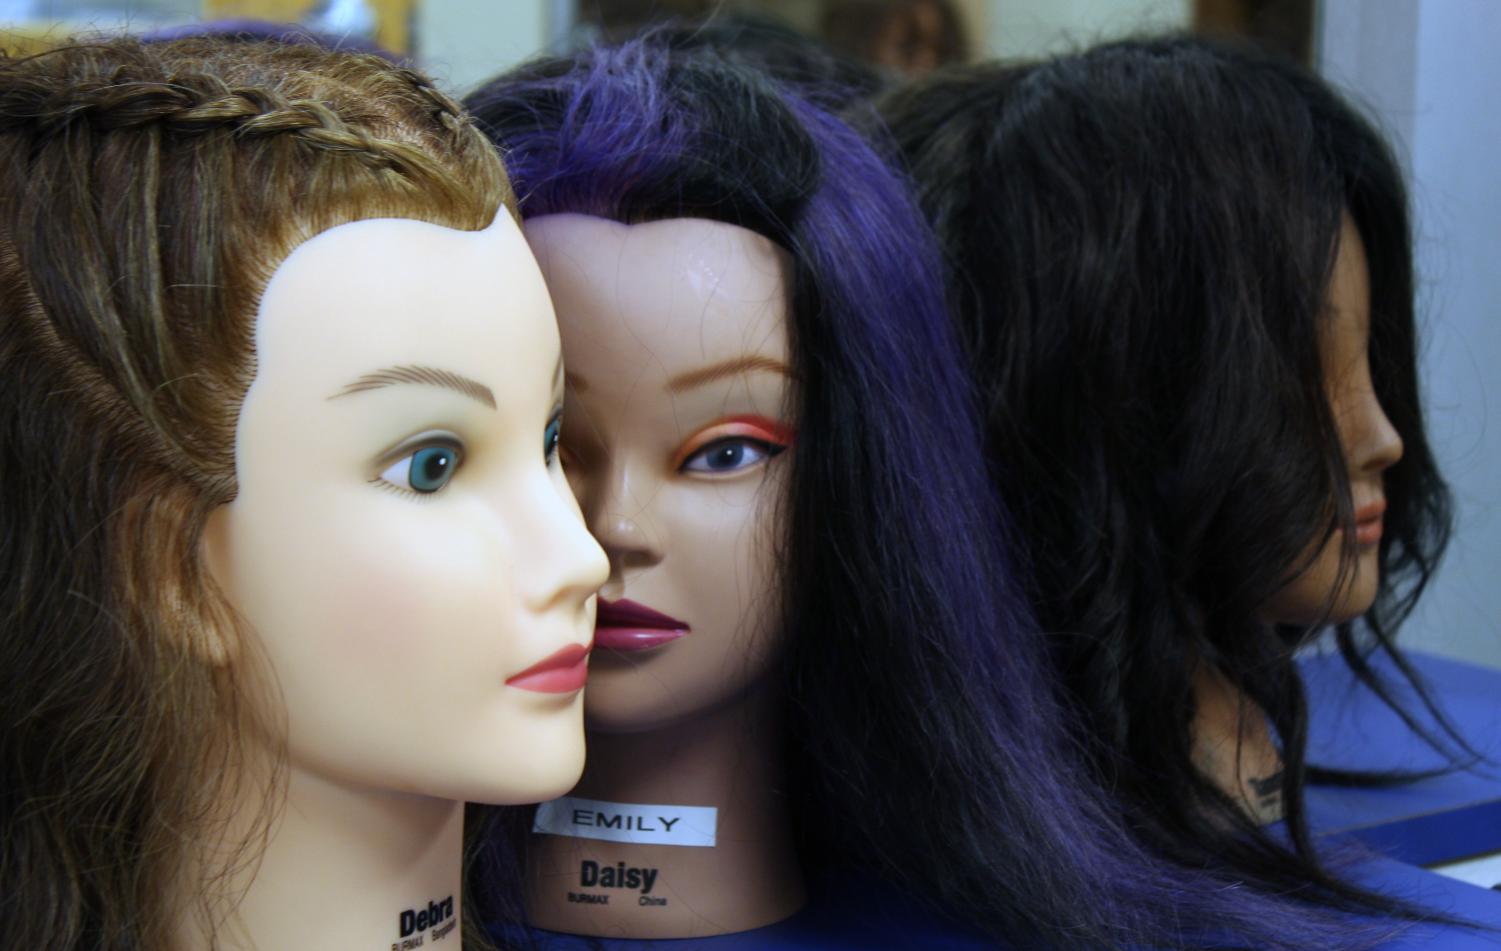 Burmax Debra Cosmetology Mannequin Head Human Hair